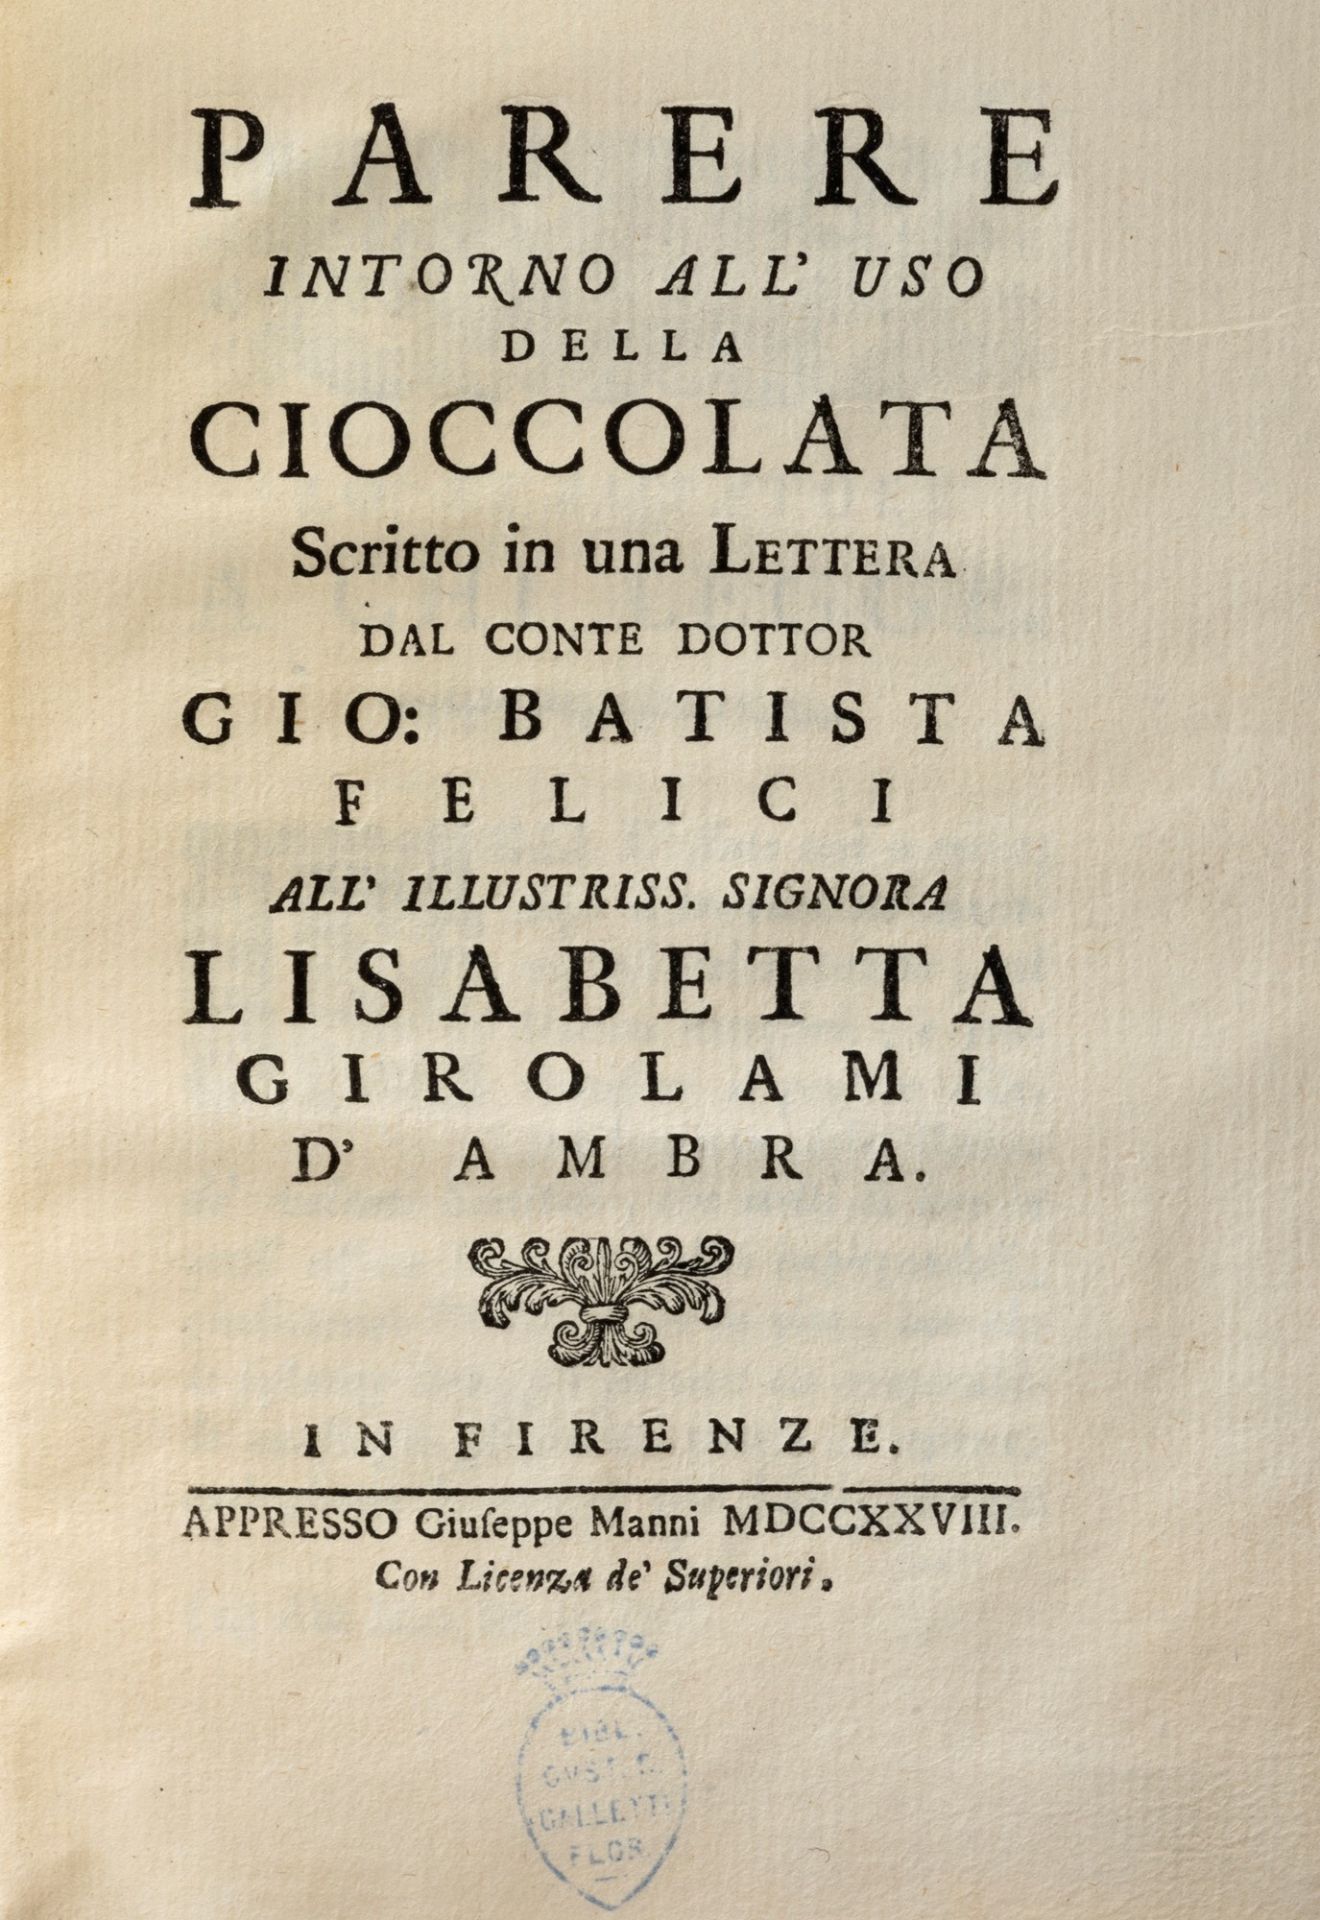 Chocolate - Felici, Gio Batista - Opinion on the use of chocolate